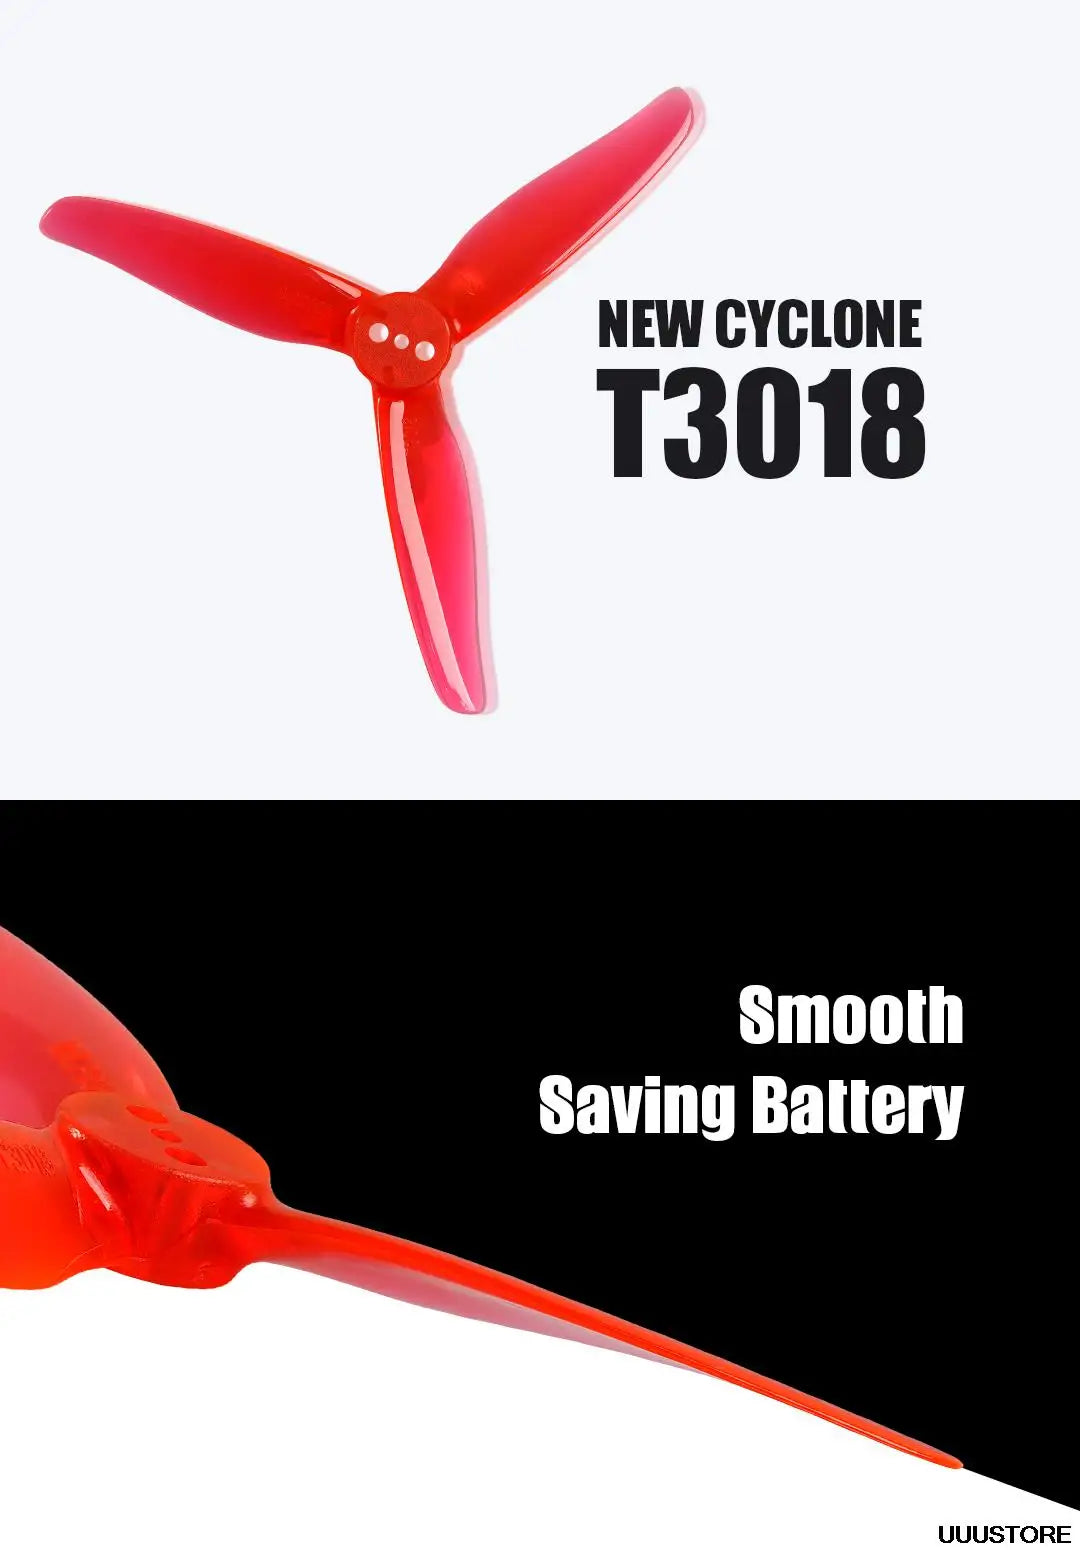 NEW CYCLONE T3018 Smooth Saving Baltery UUUST